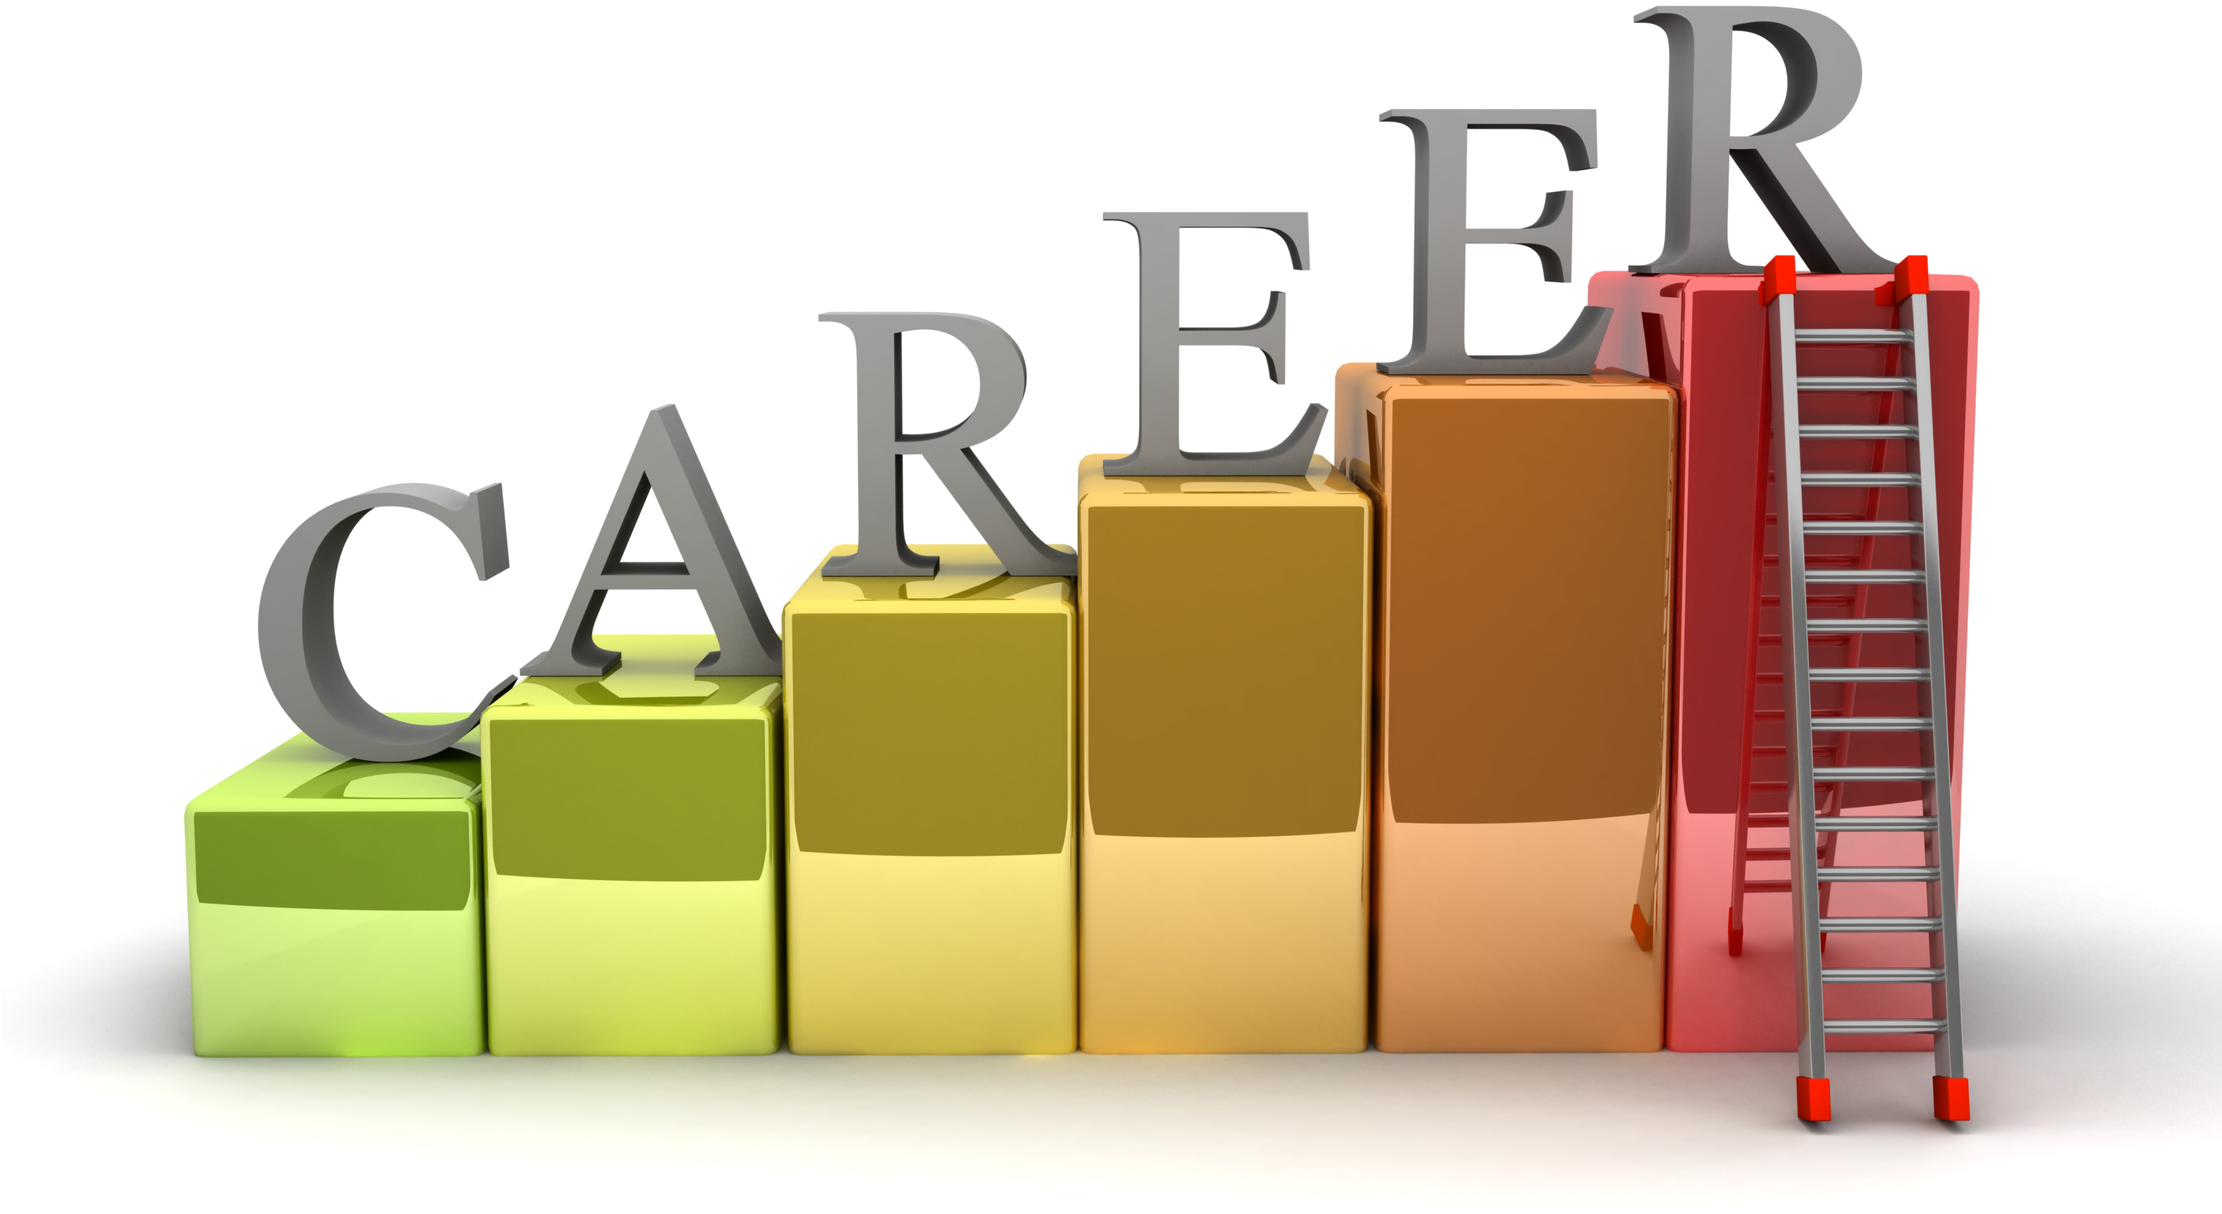 Career Development Cliparts - Career Ladder (2221x1378)